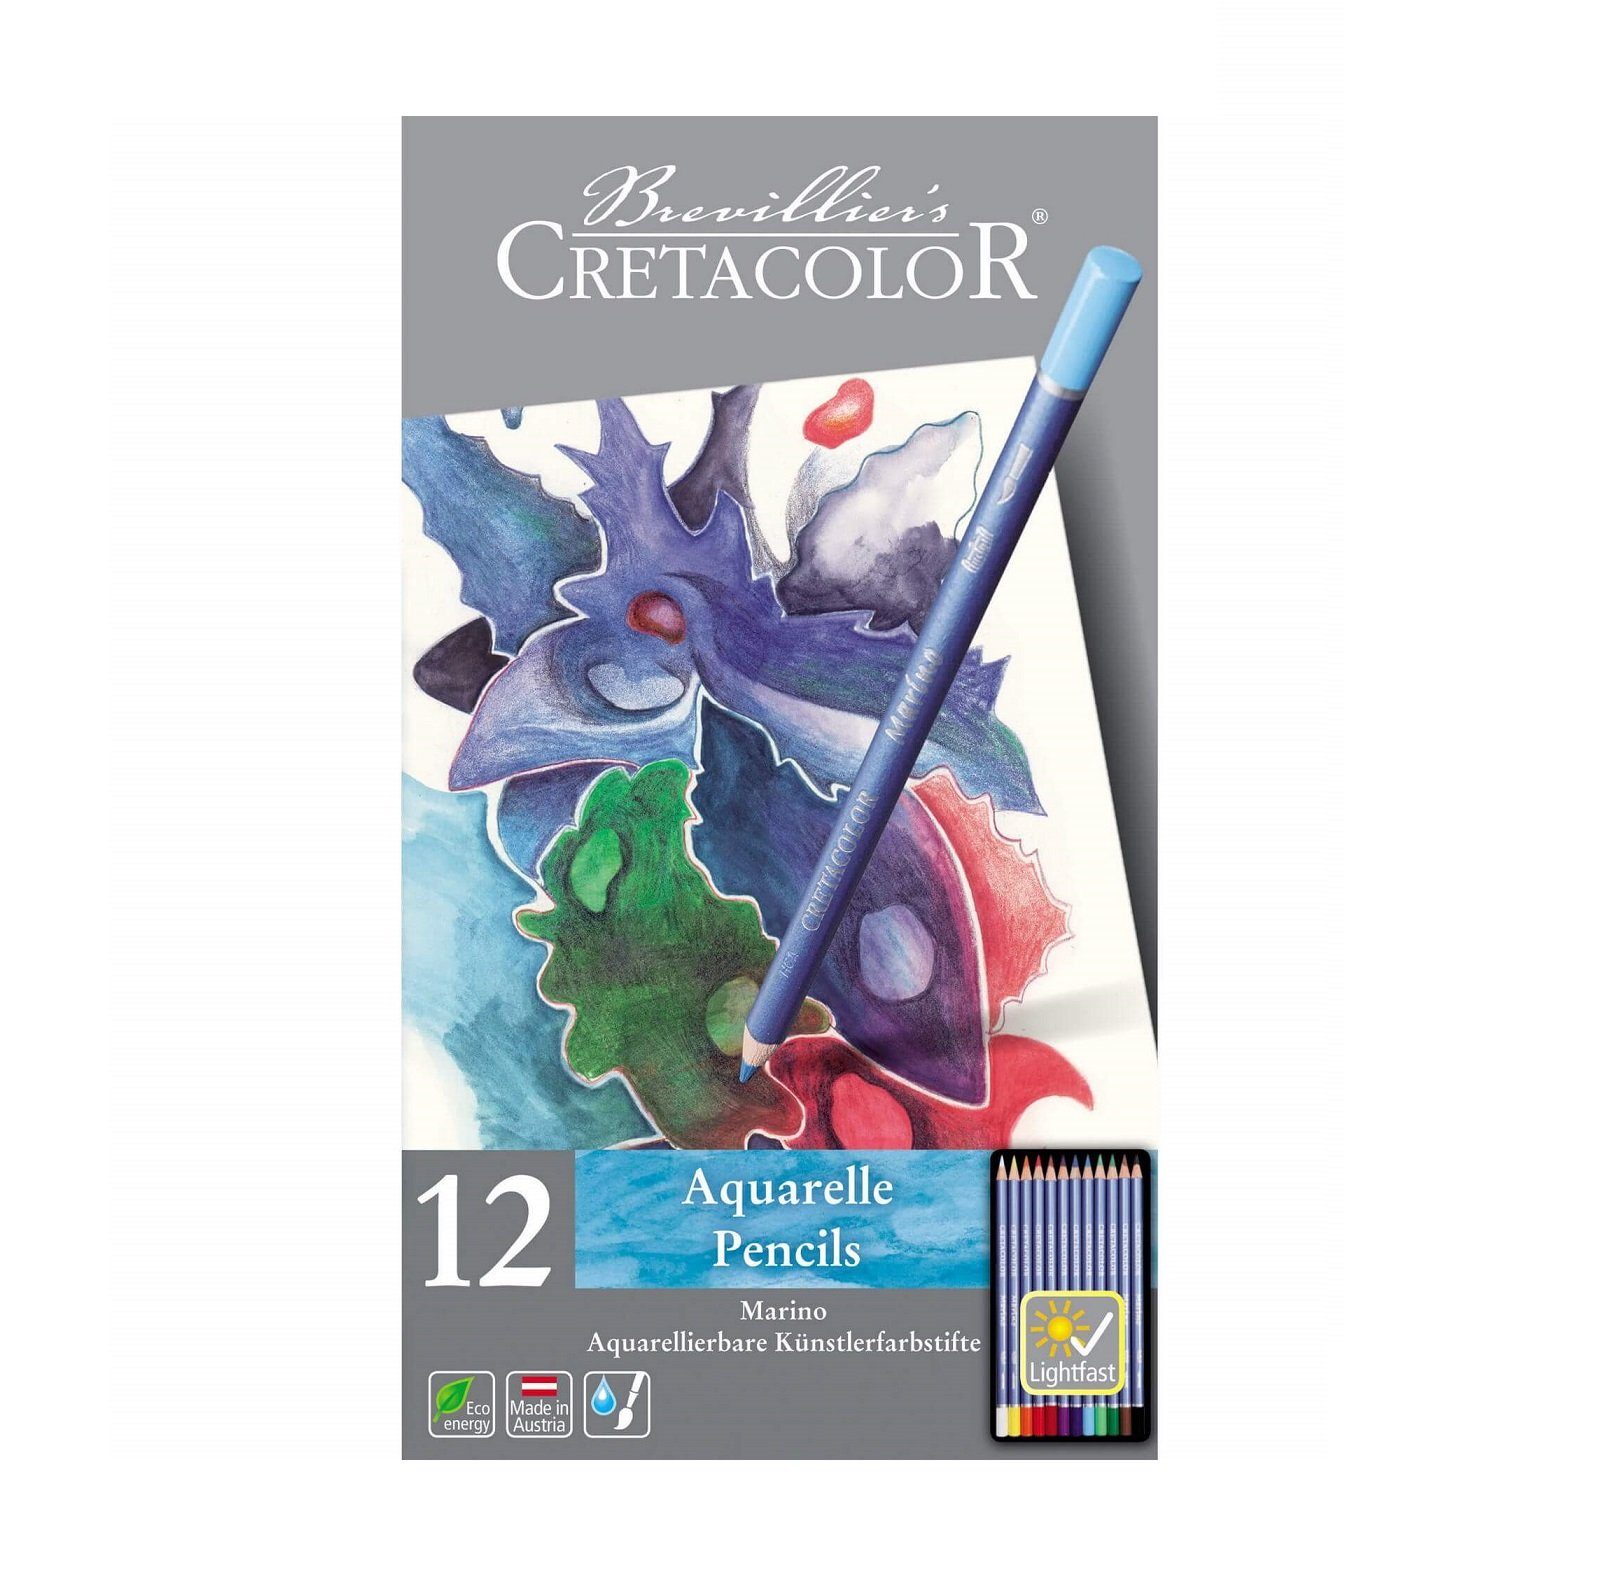 Brevilliers Cretacolor Aquarellstifte Marino Aquarellstifte, 12 Farben, hochwertige Künstlerfarbstifte - Made in Austria